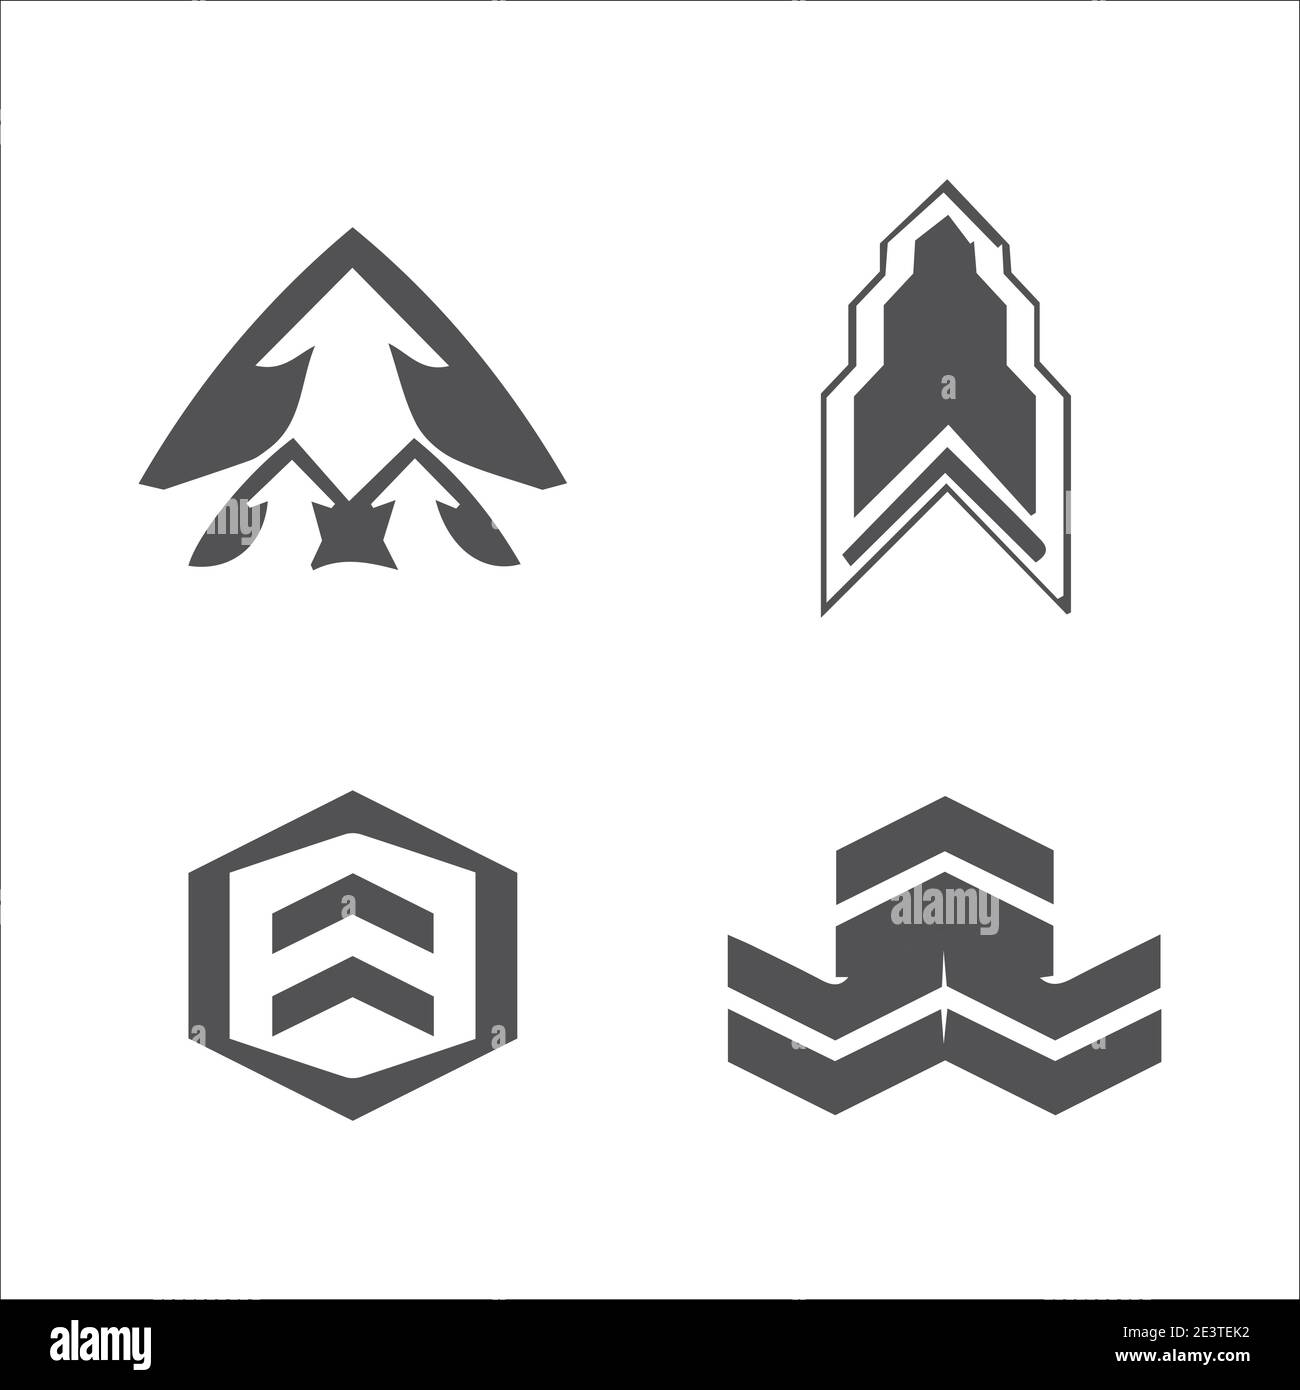 Abstract  arrow symbols for logo design icons Stock Vector